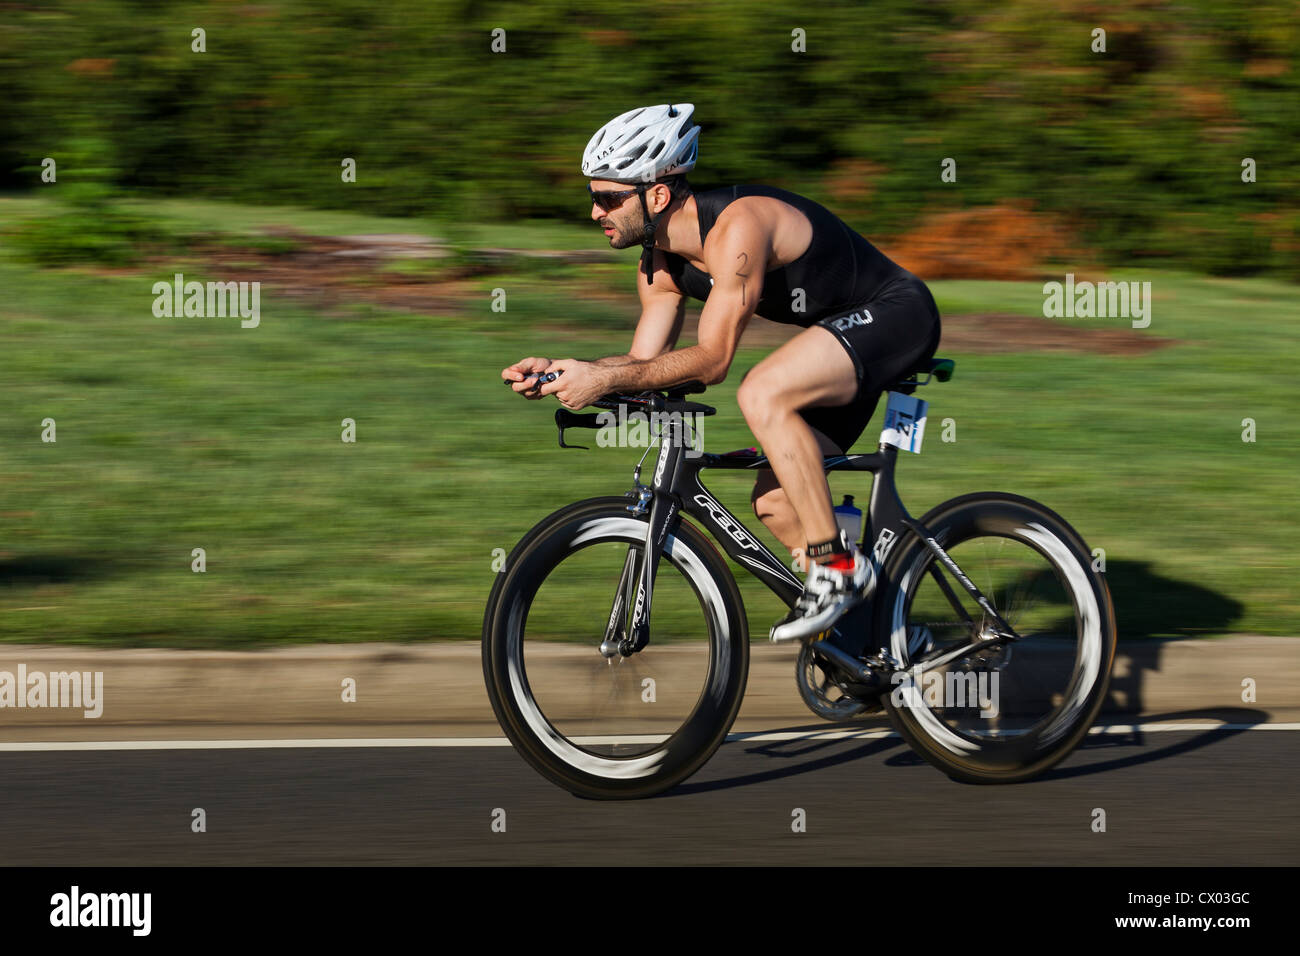 Cyclist racing in bike race - USA Stock Photo